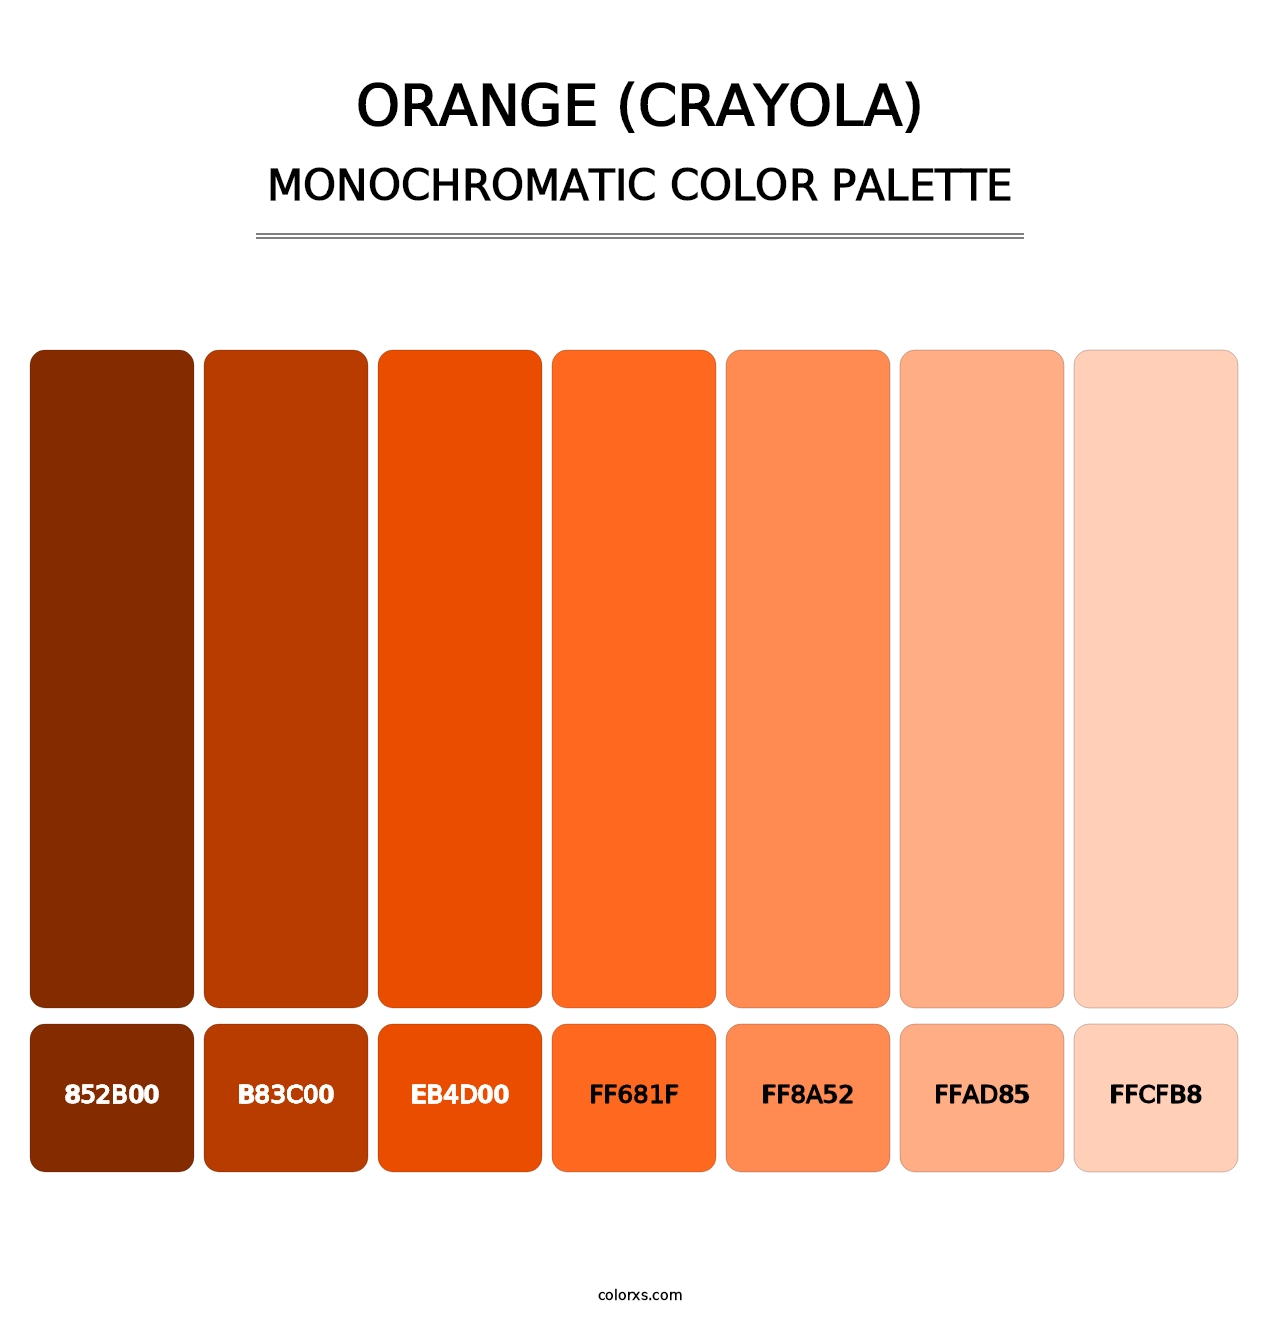 Orange (Crayola) - Monochromatic Color Palette